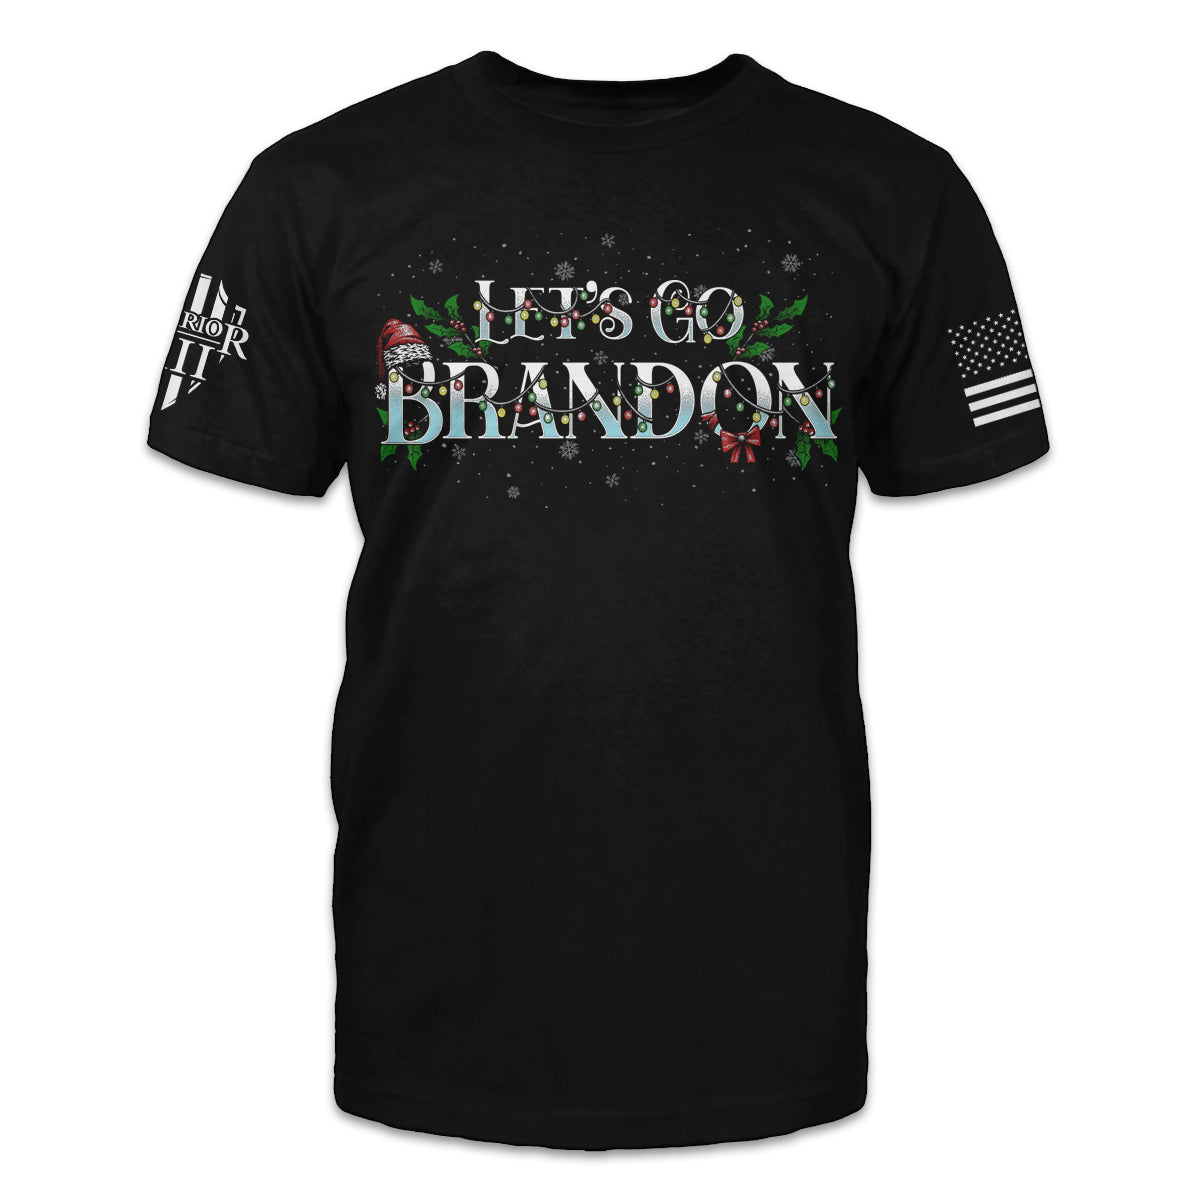 Dark Brandon Long Sleeve Shirt